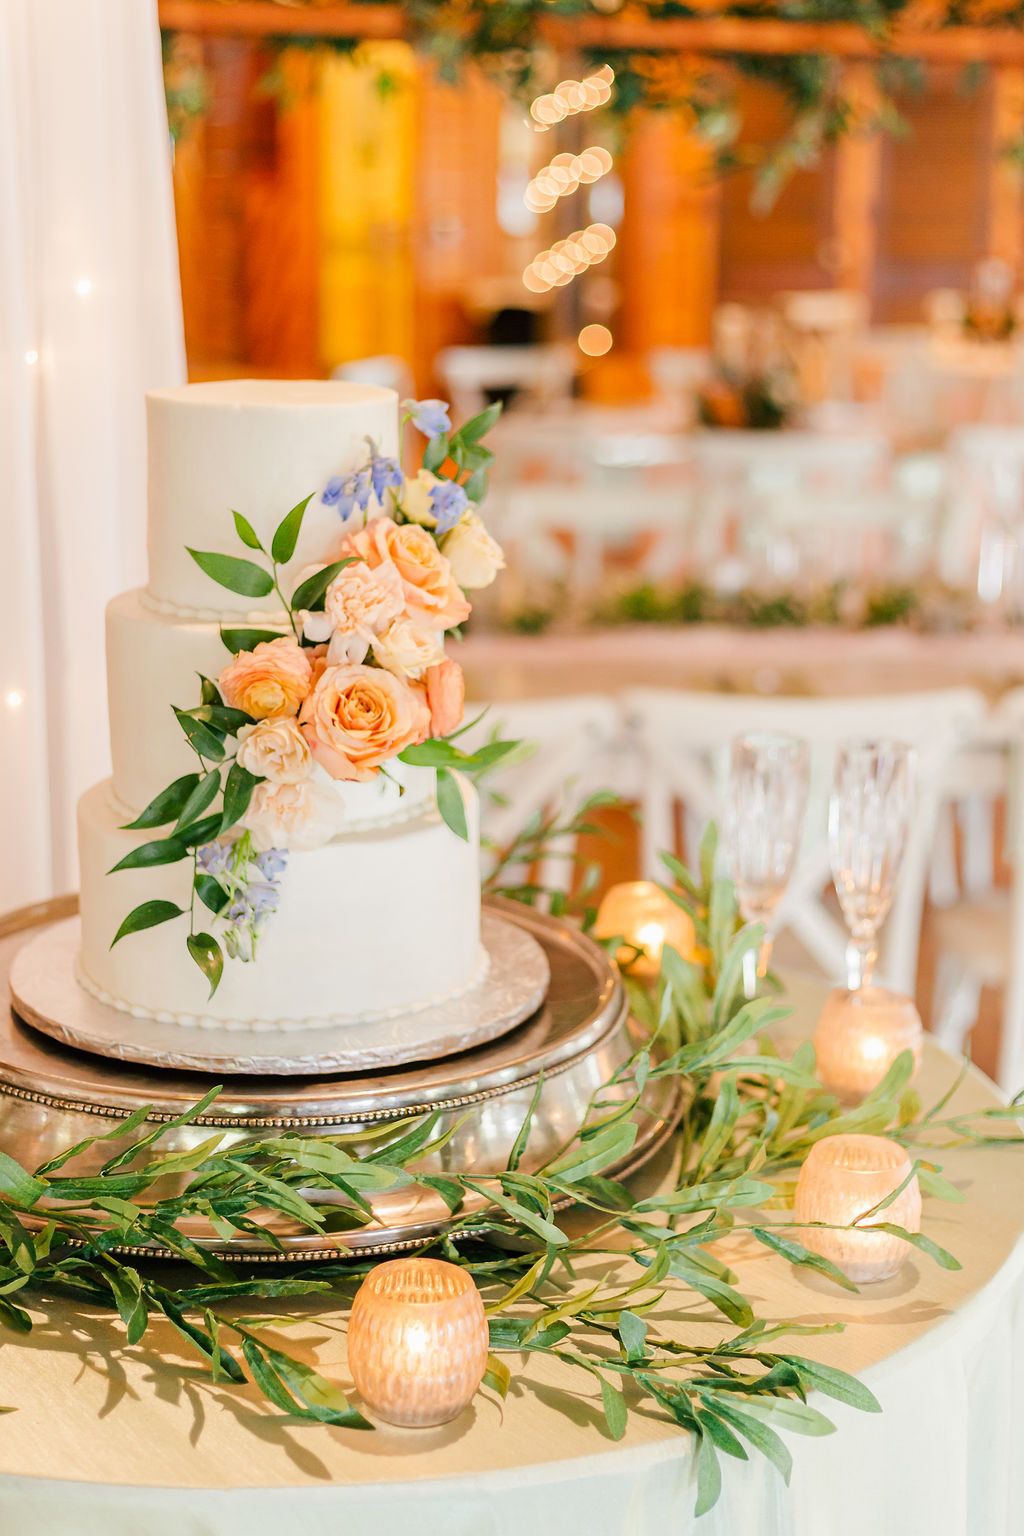 Wedding Cake with Cascading Peach Flowers